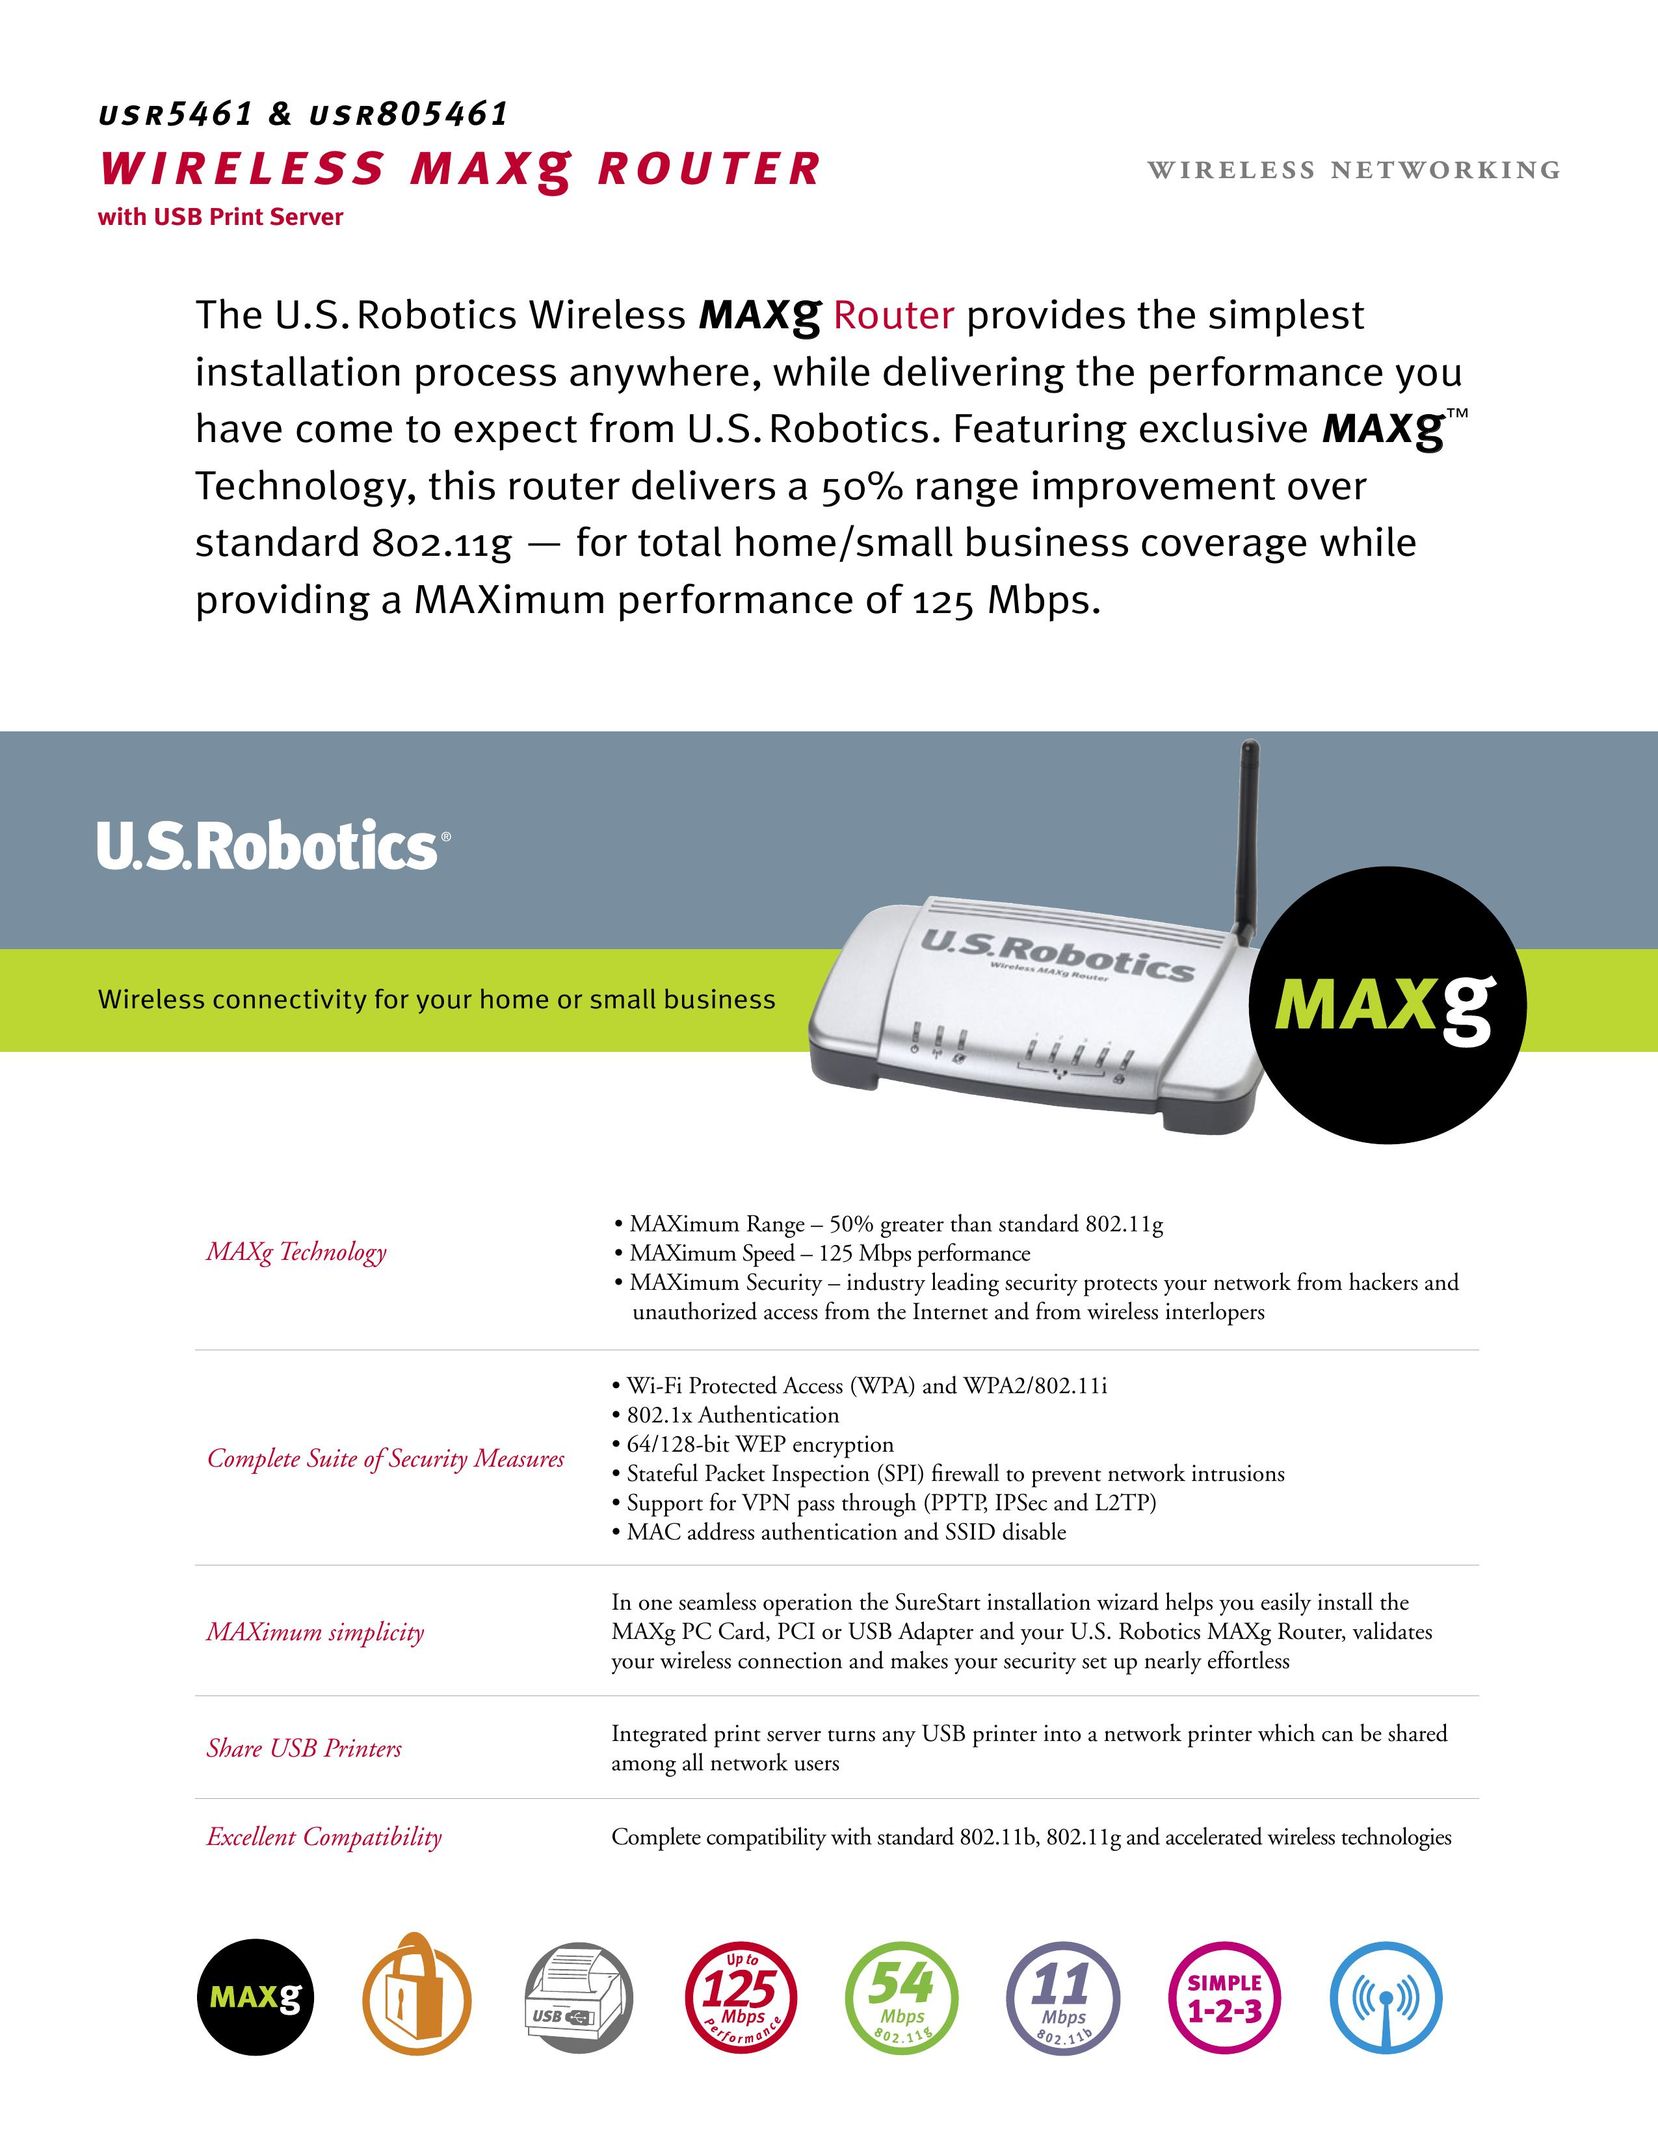 USRobotics usr805461 Network Router User Manual